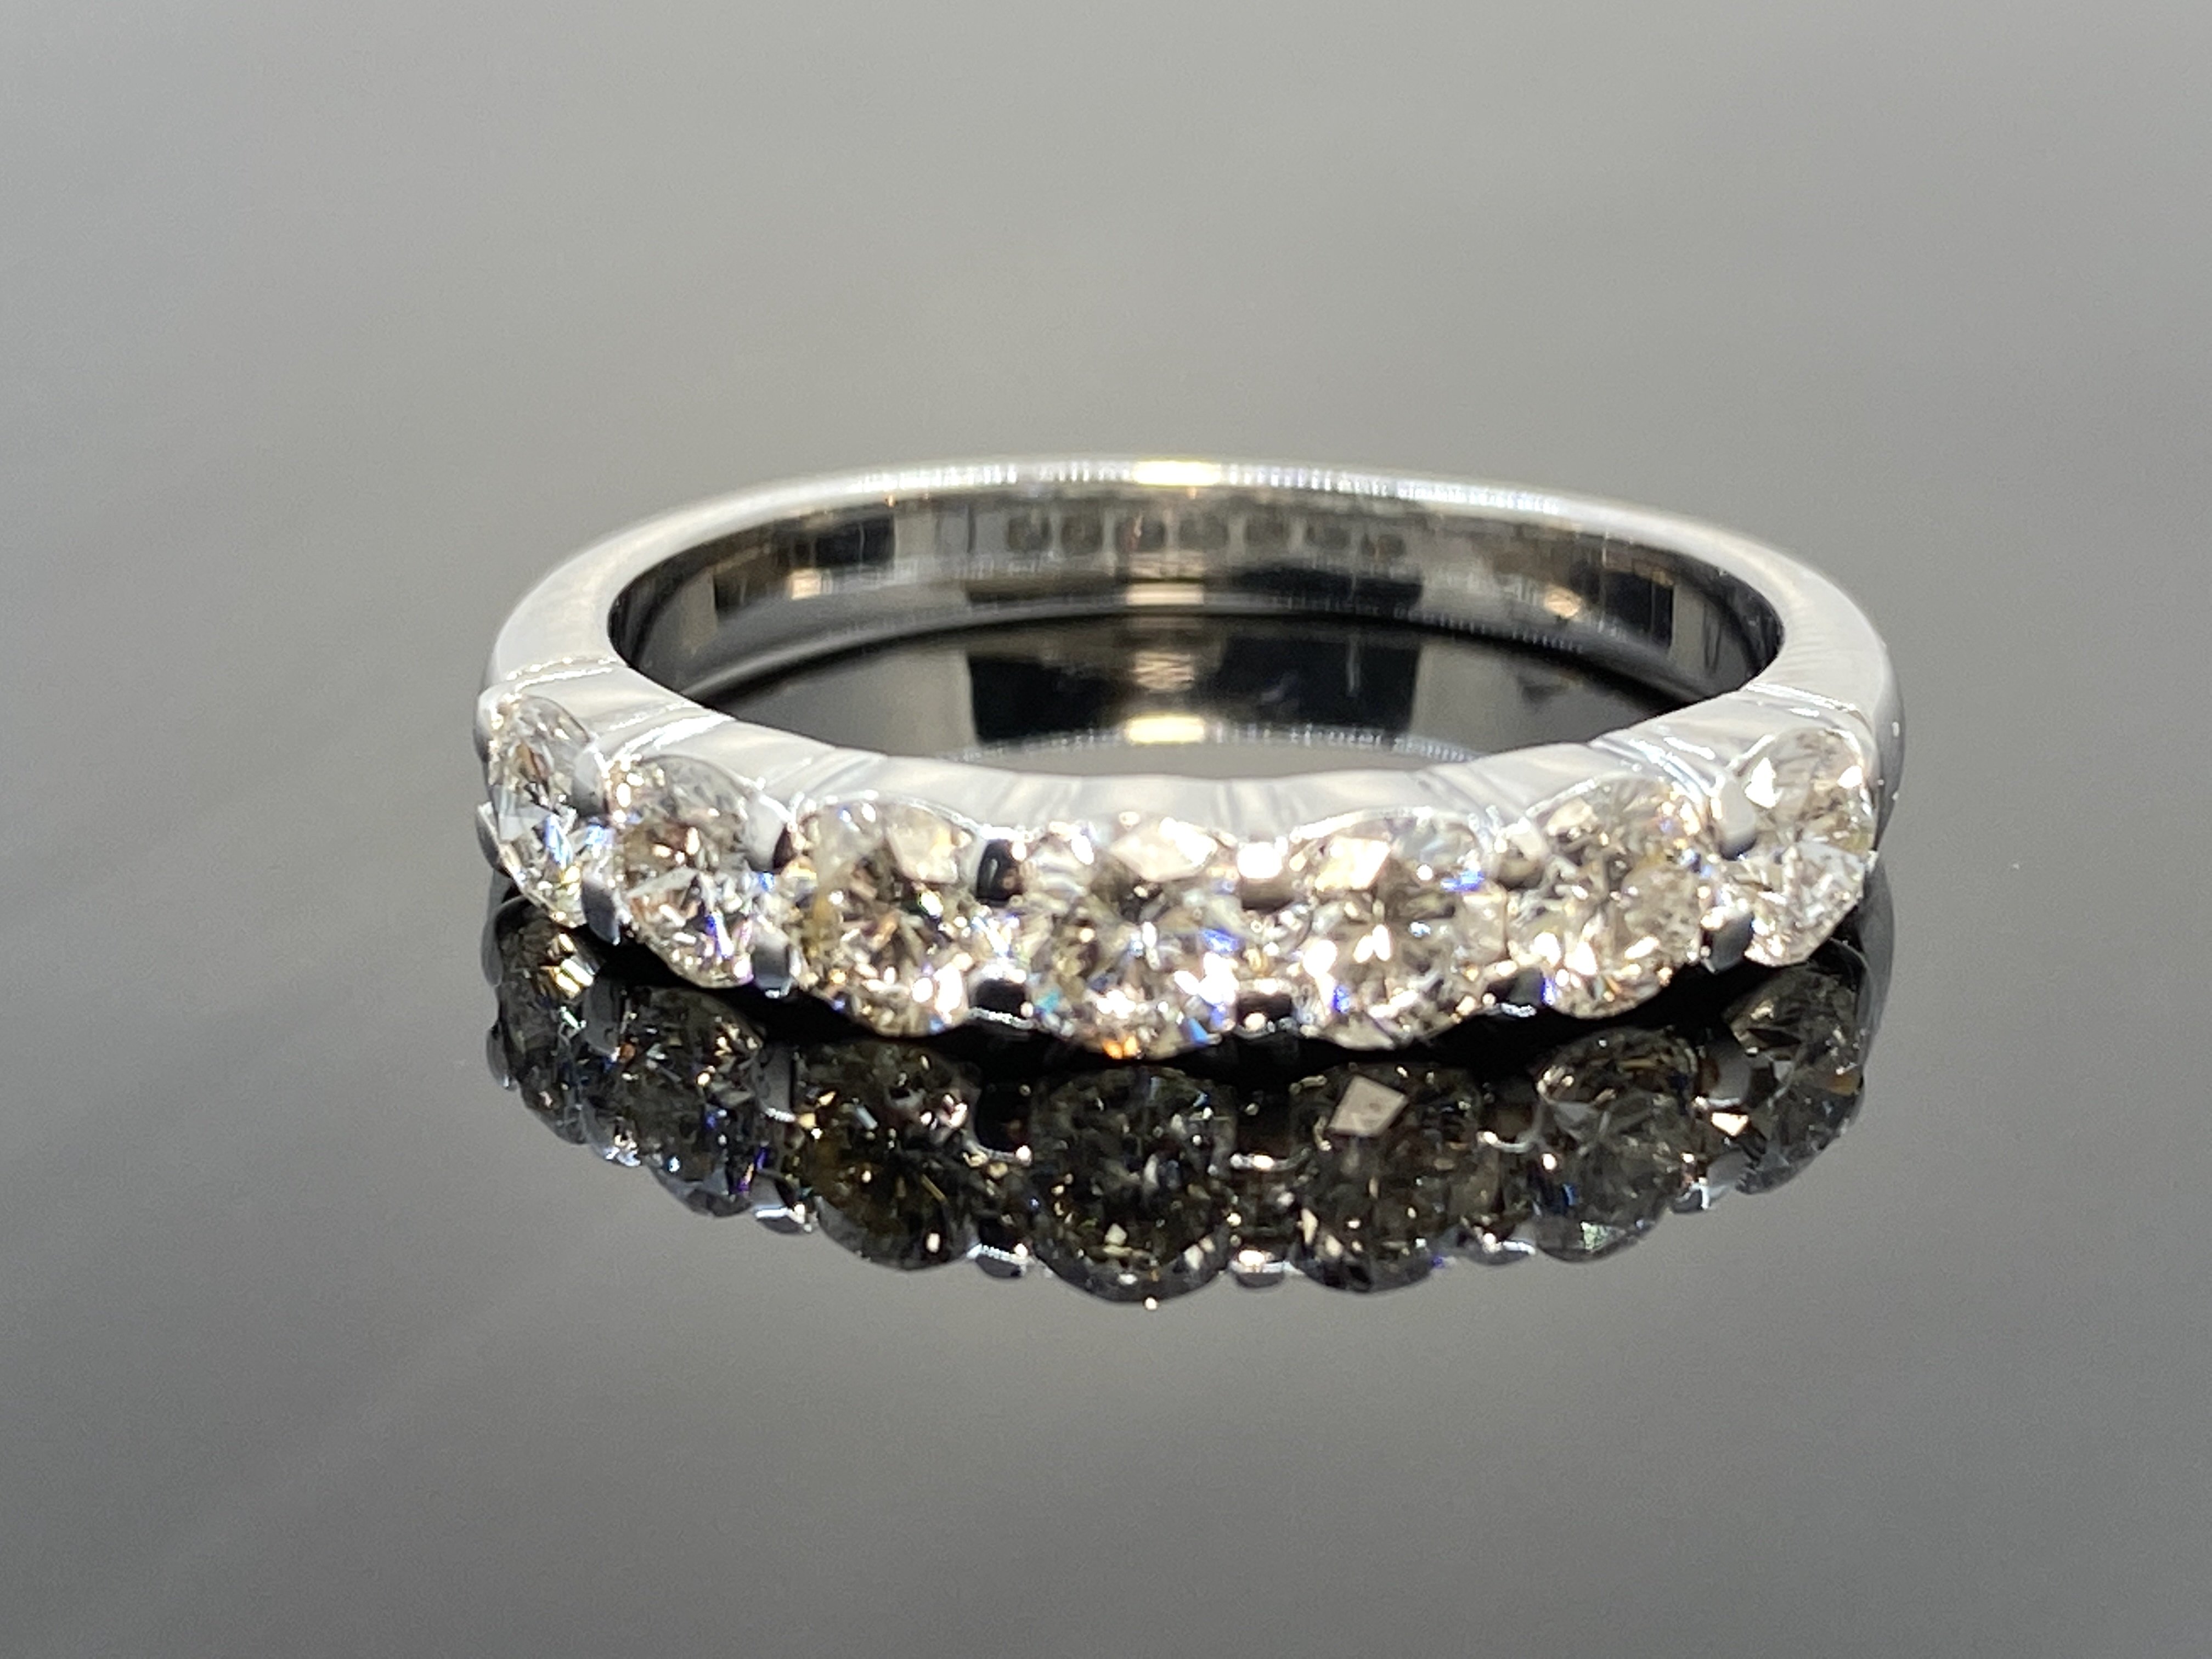 Купить дорожку с бриллиантами. 0490-K5r-02 кольцо с бриллиантами. Кольцо Тиффани Алькор. МЮЗ r01-34075 кольцо с бриллиантами.